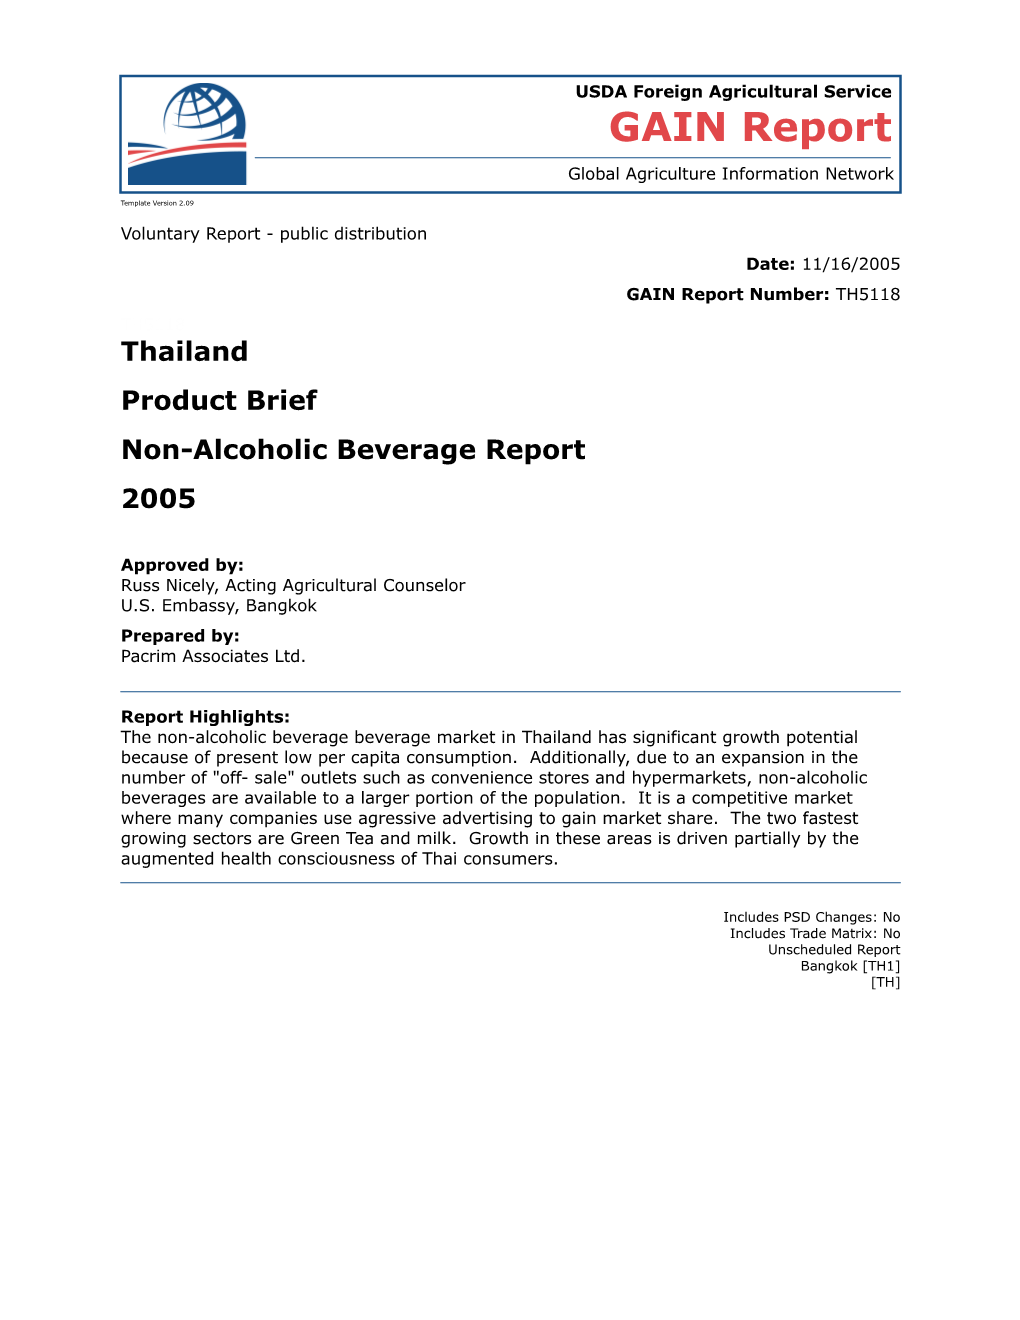 Thailand Product Brief Non-Alcoholic Beverage Report